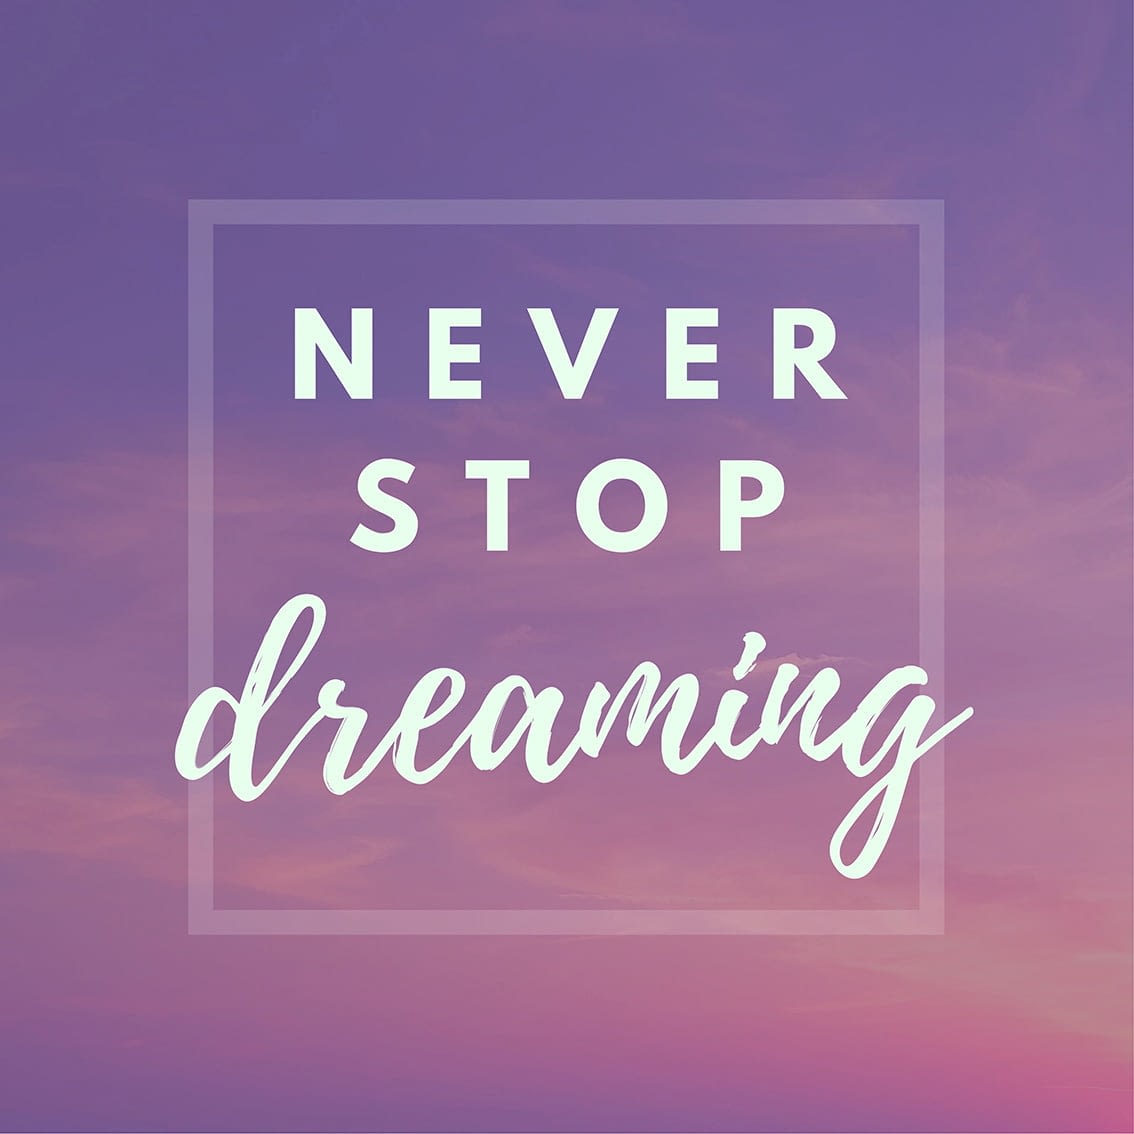 Never dreamed перевод. Never stop Dreaming. Never stop Dreaming перевод на русский.